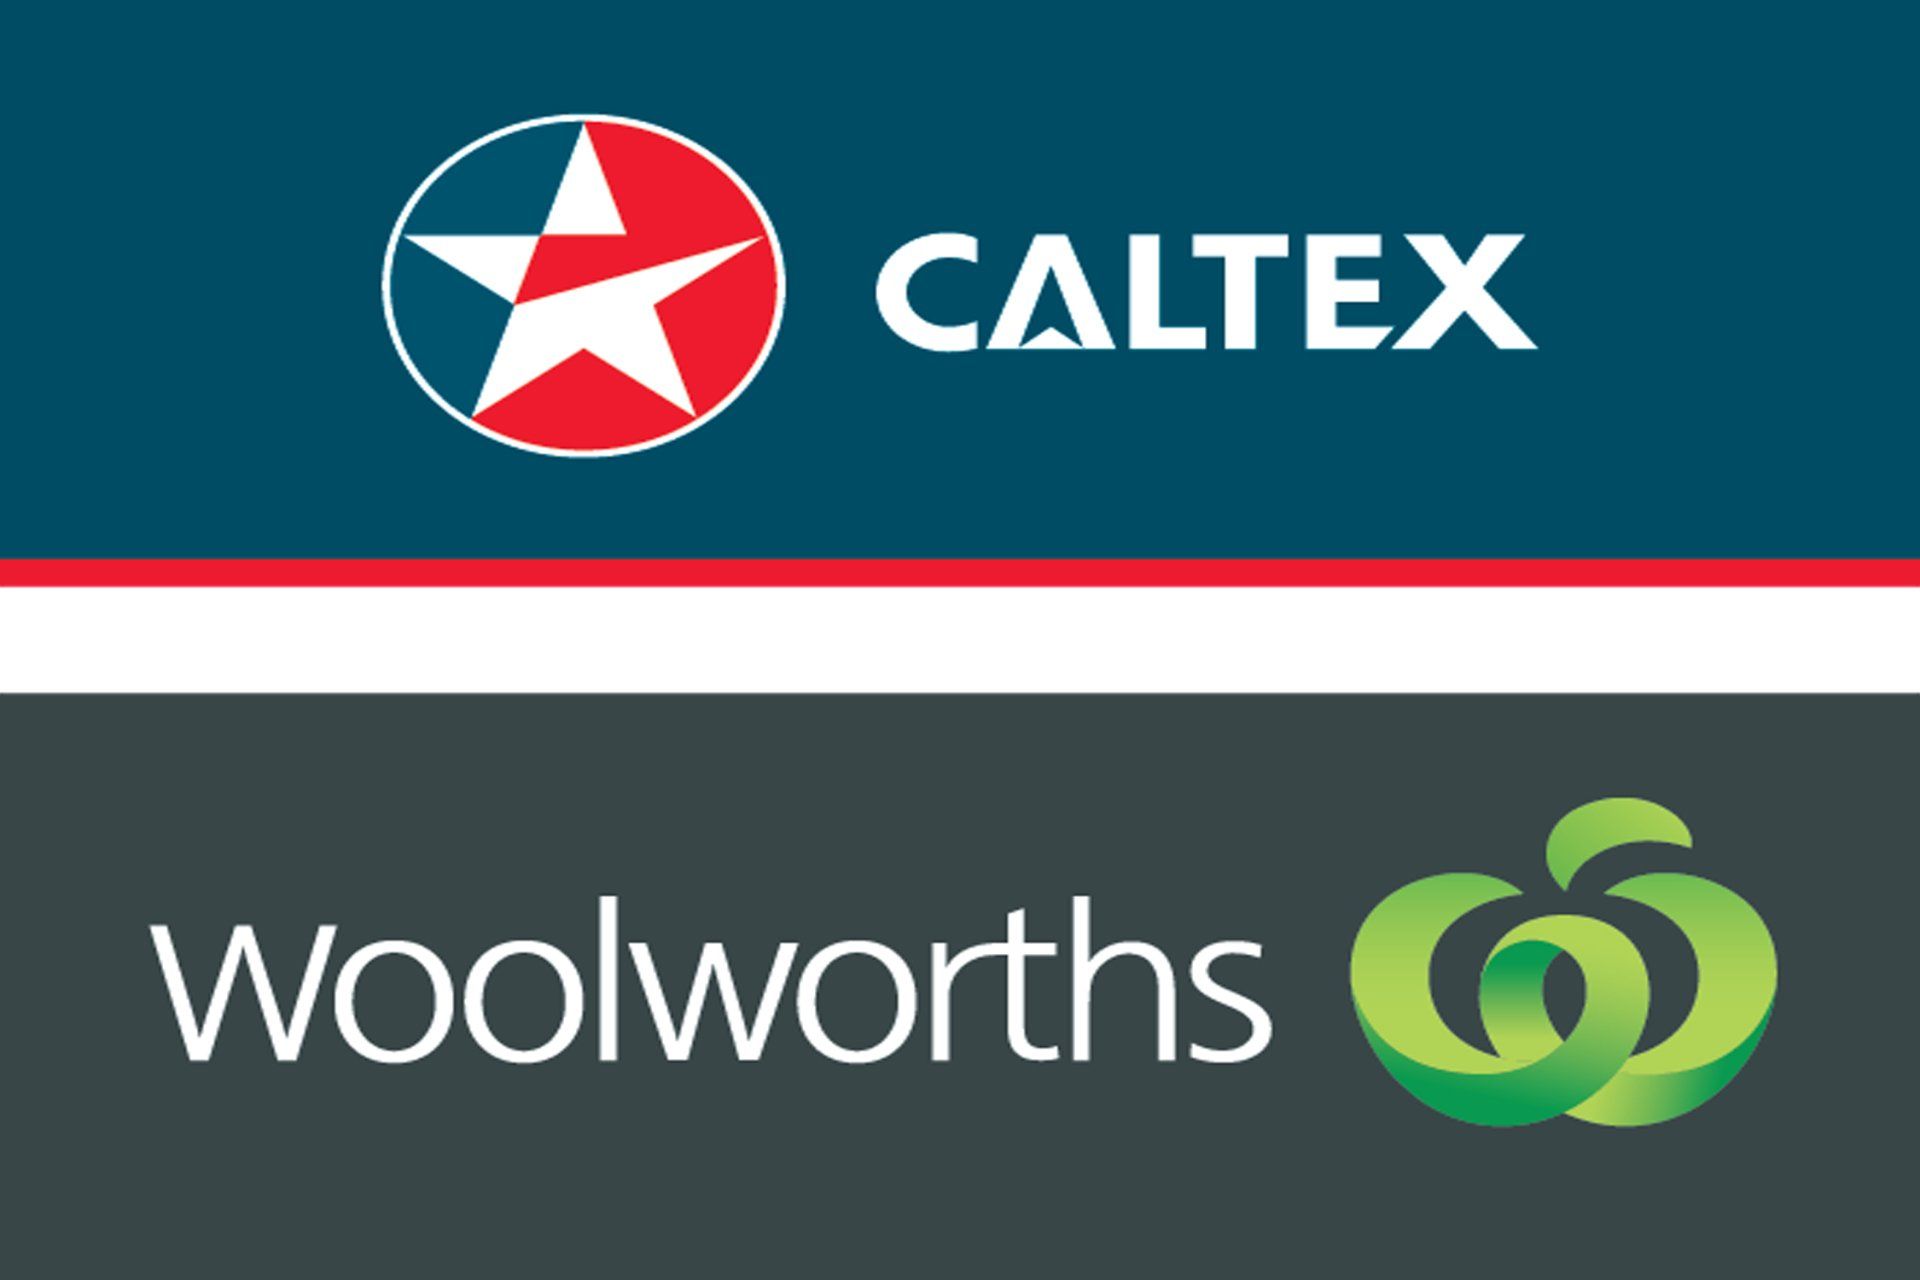 Caltex Woolworths